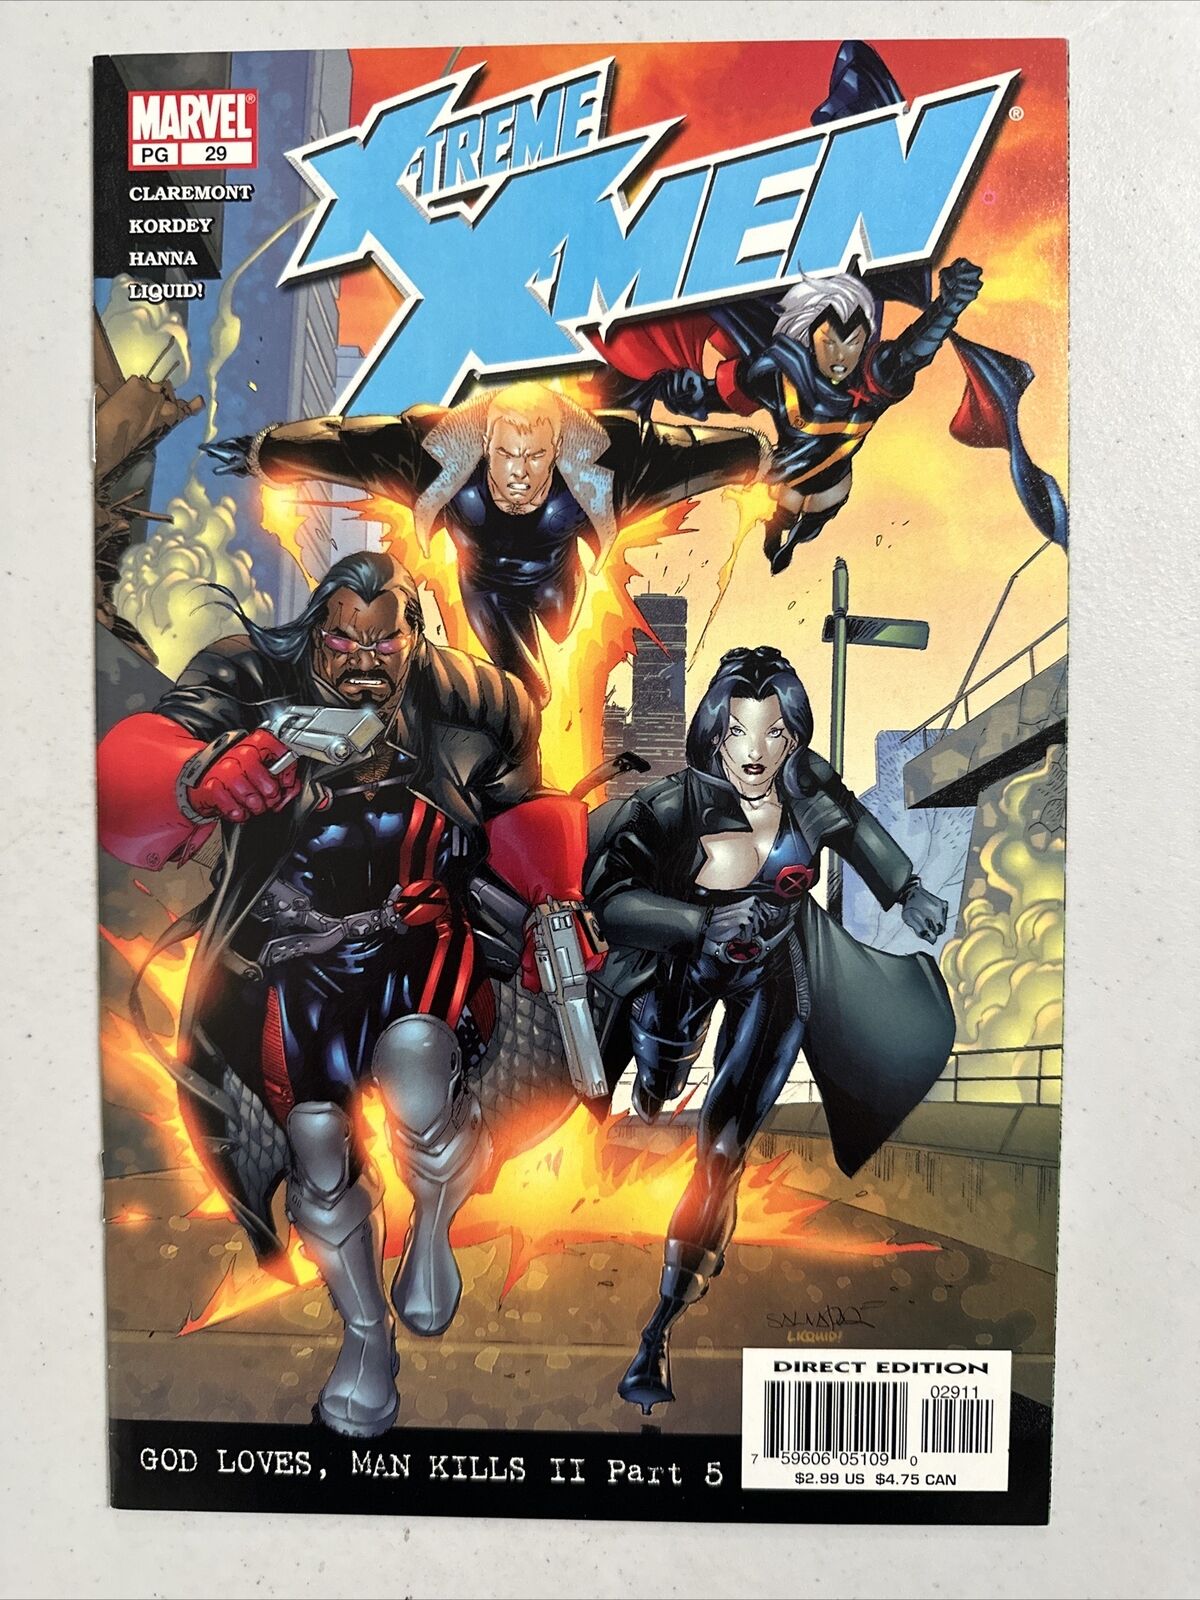 X-Treme X-Men #29 Marvel Comics HIGH GRADE COMBINE S&H